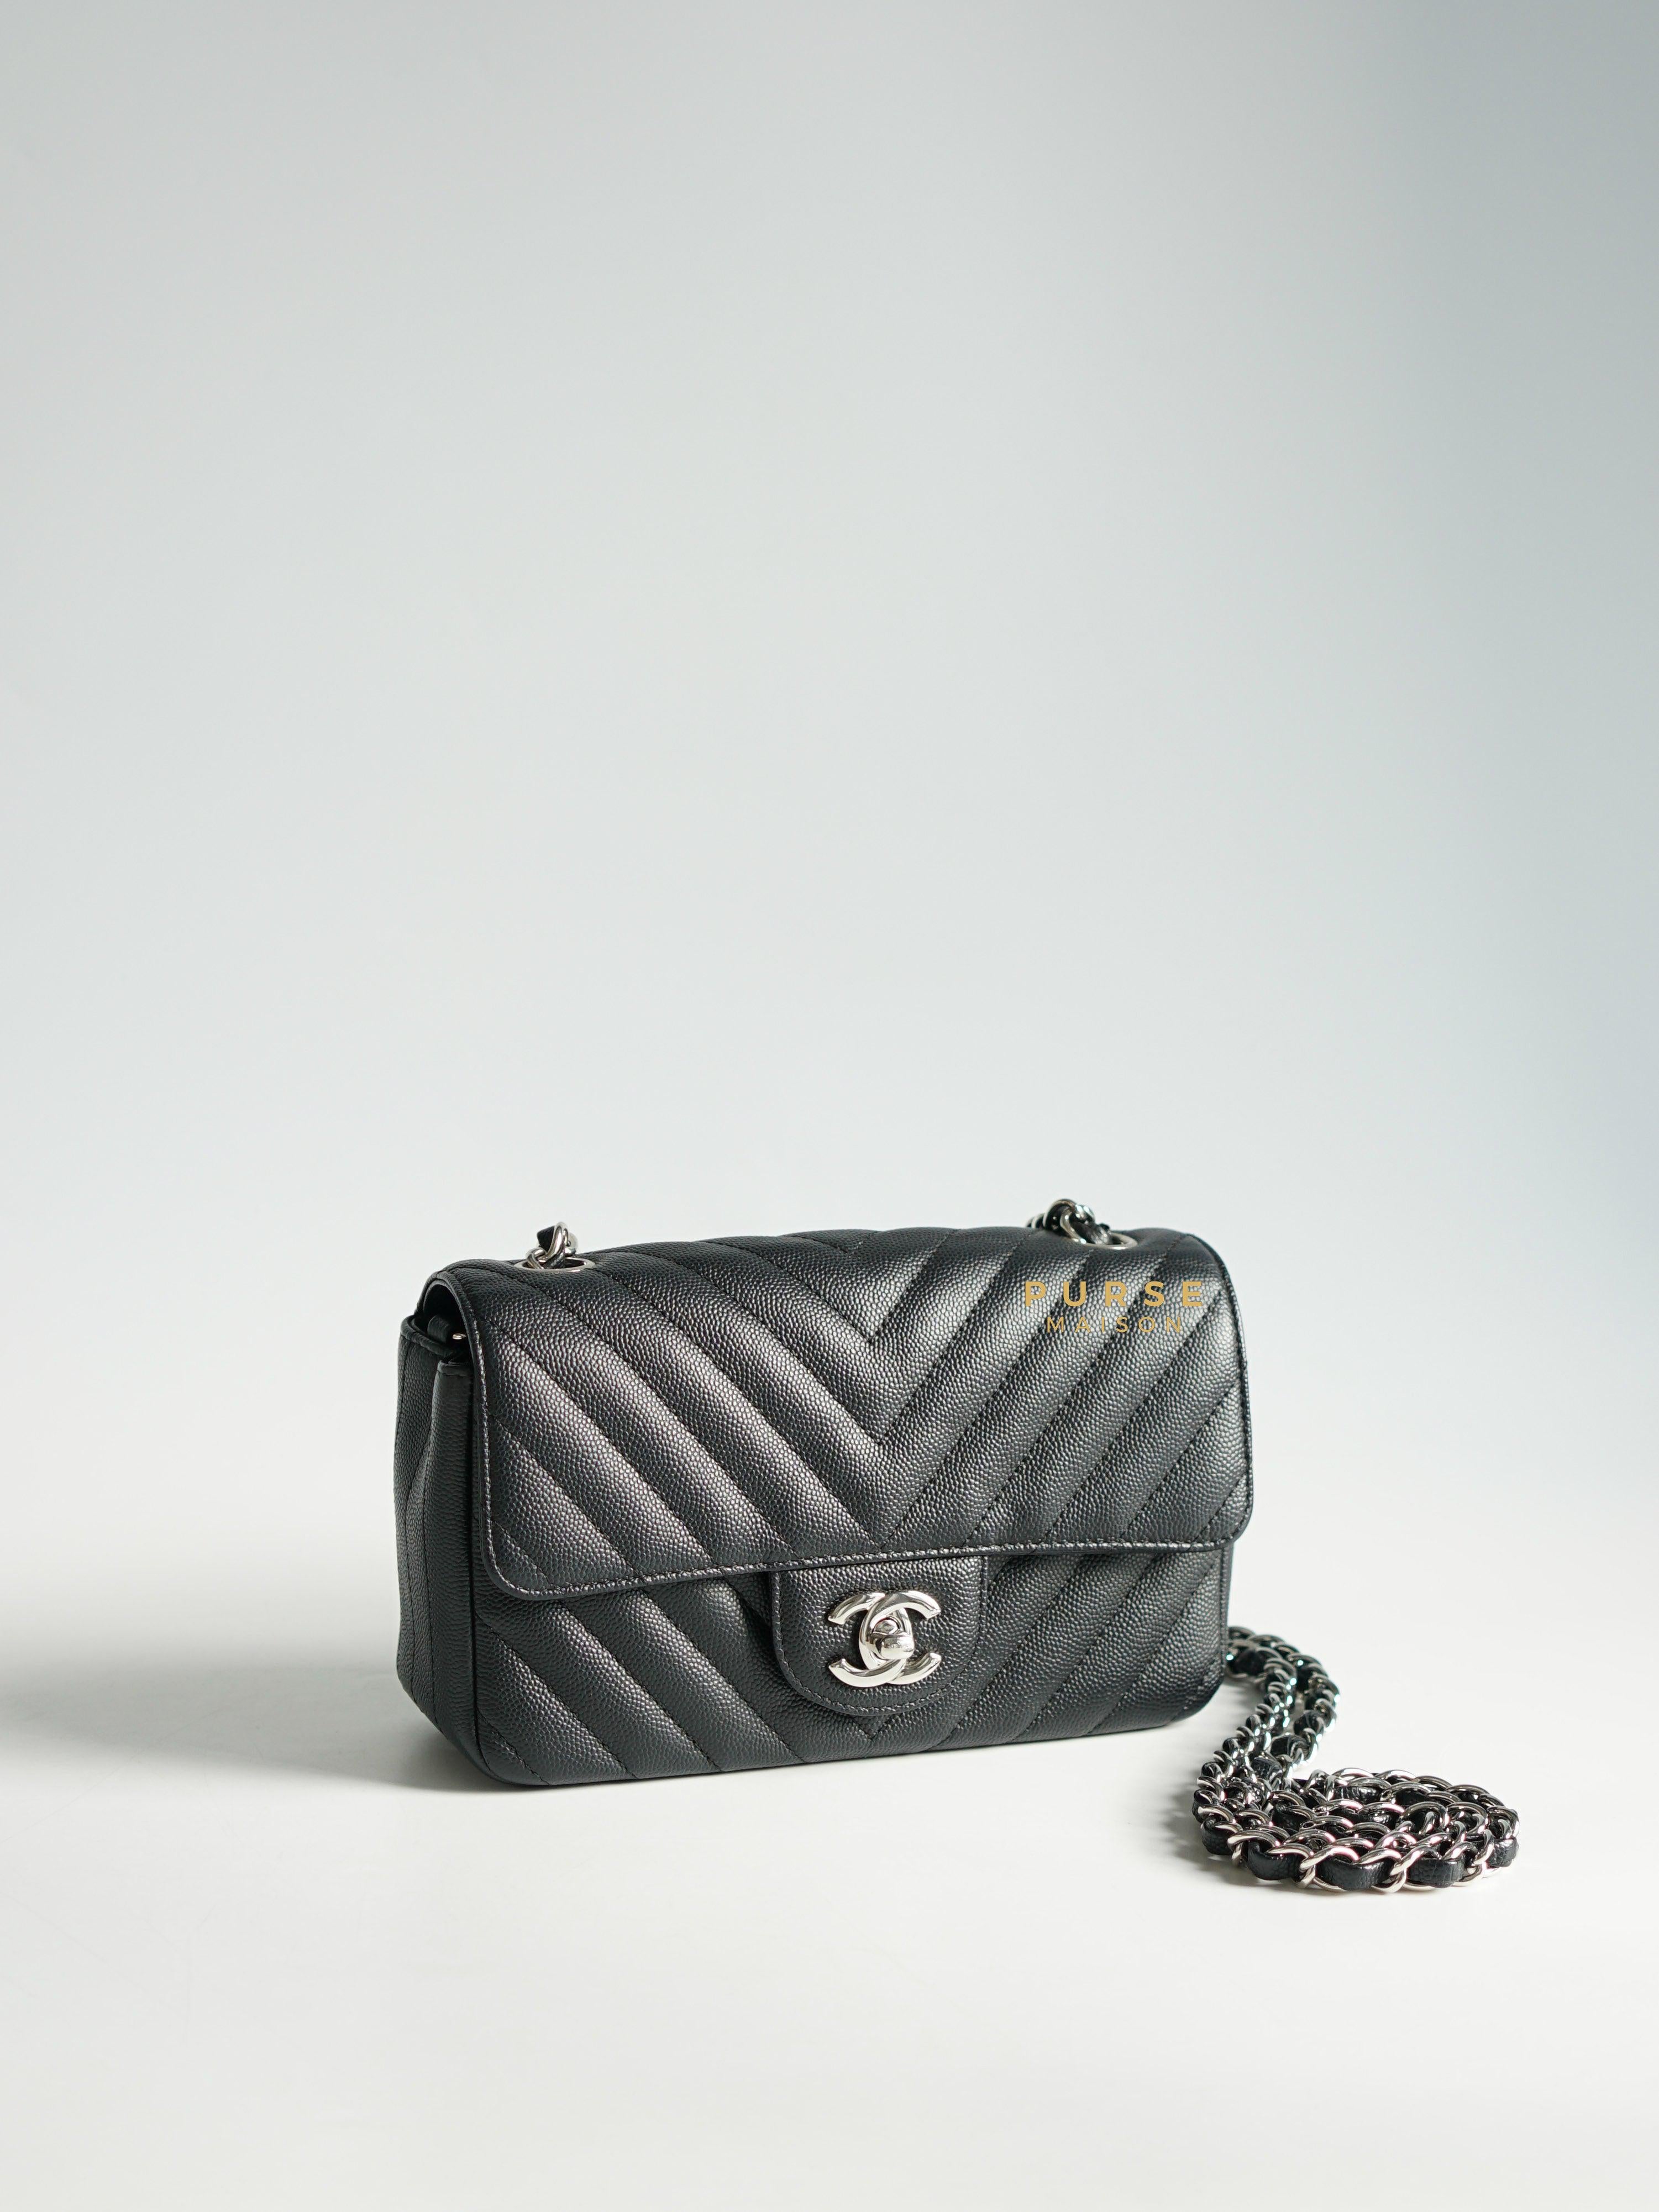 Chanel Mini Rectangle Black Chevron Caviar and Silver Hardware Series 25 | Purse Maison Luxury Bags Shop